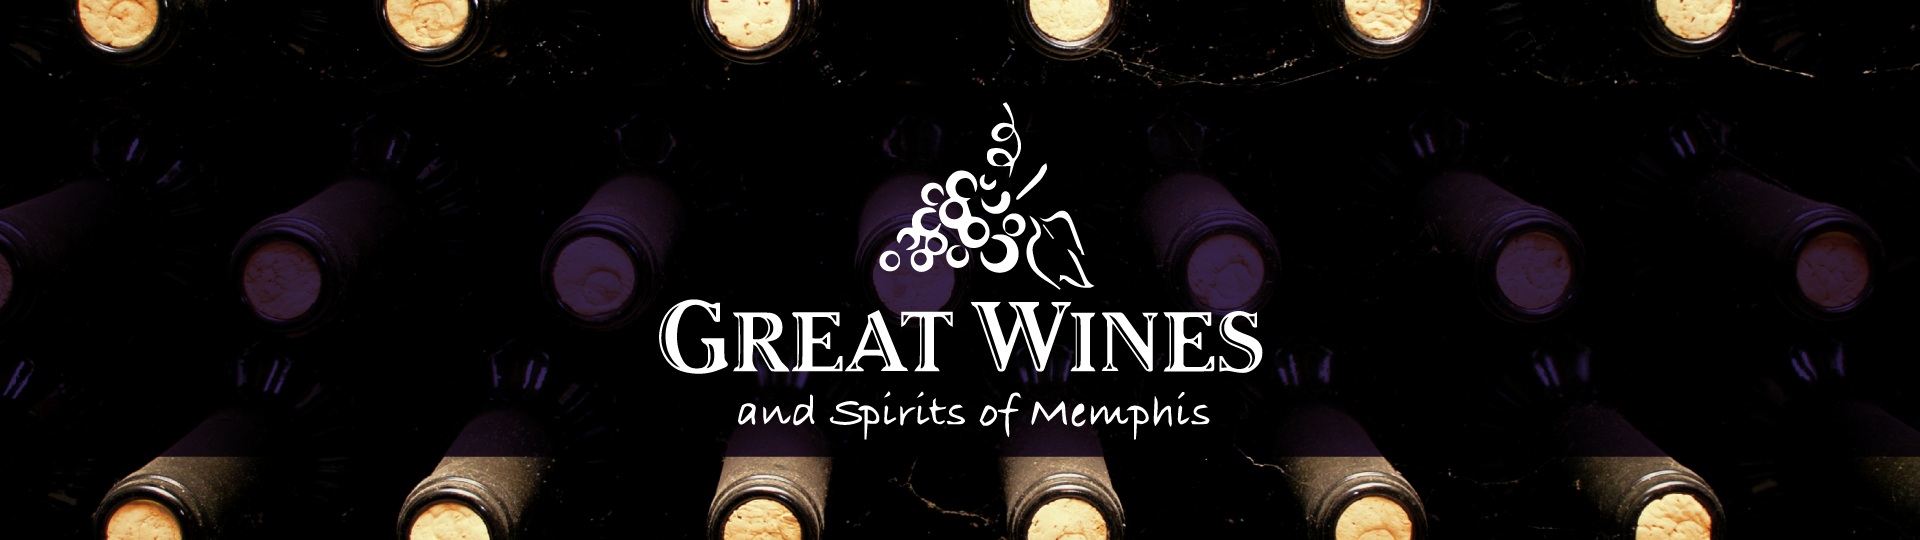 Great Wine & Spirits of Memphis